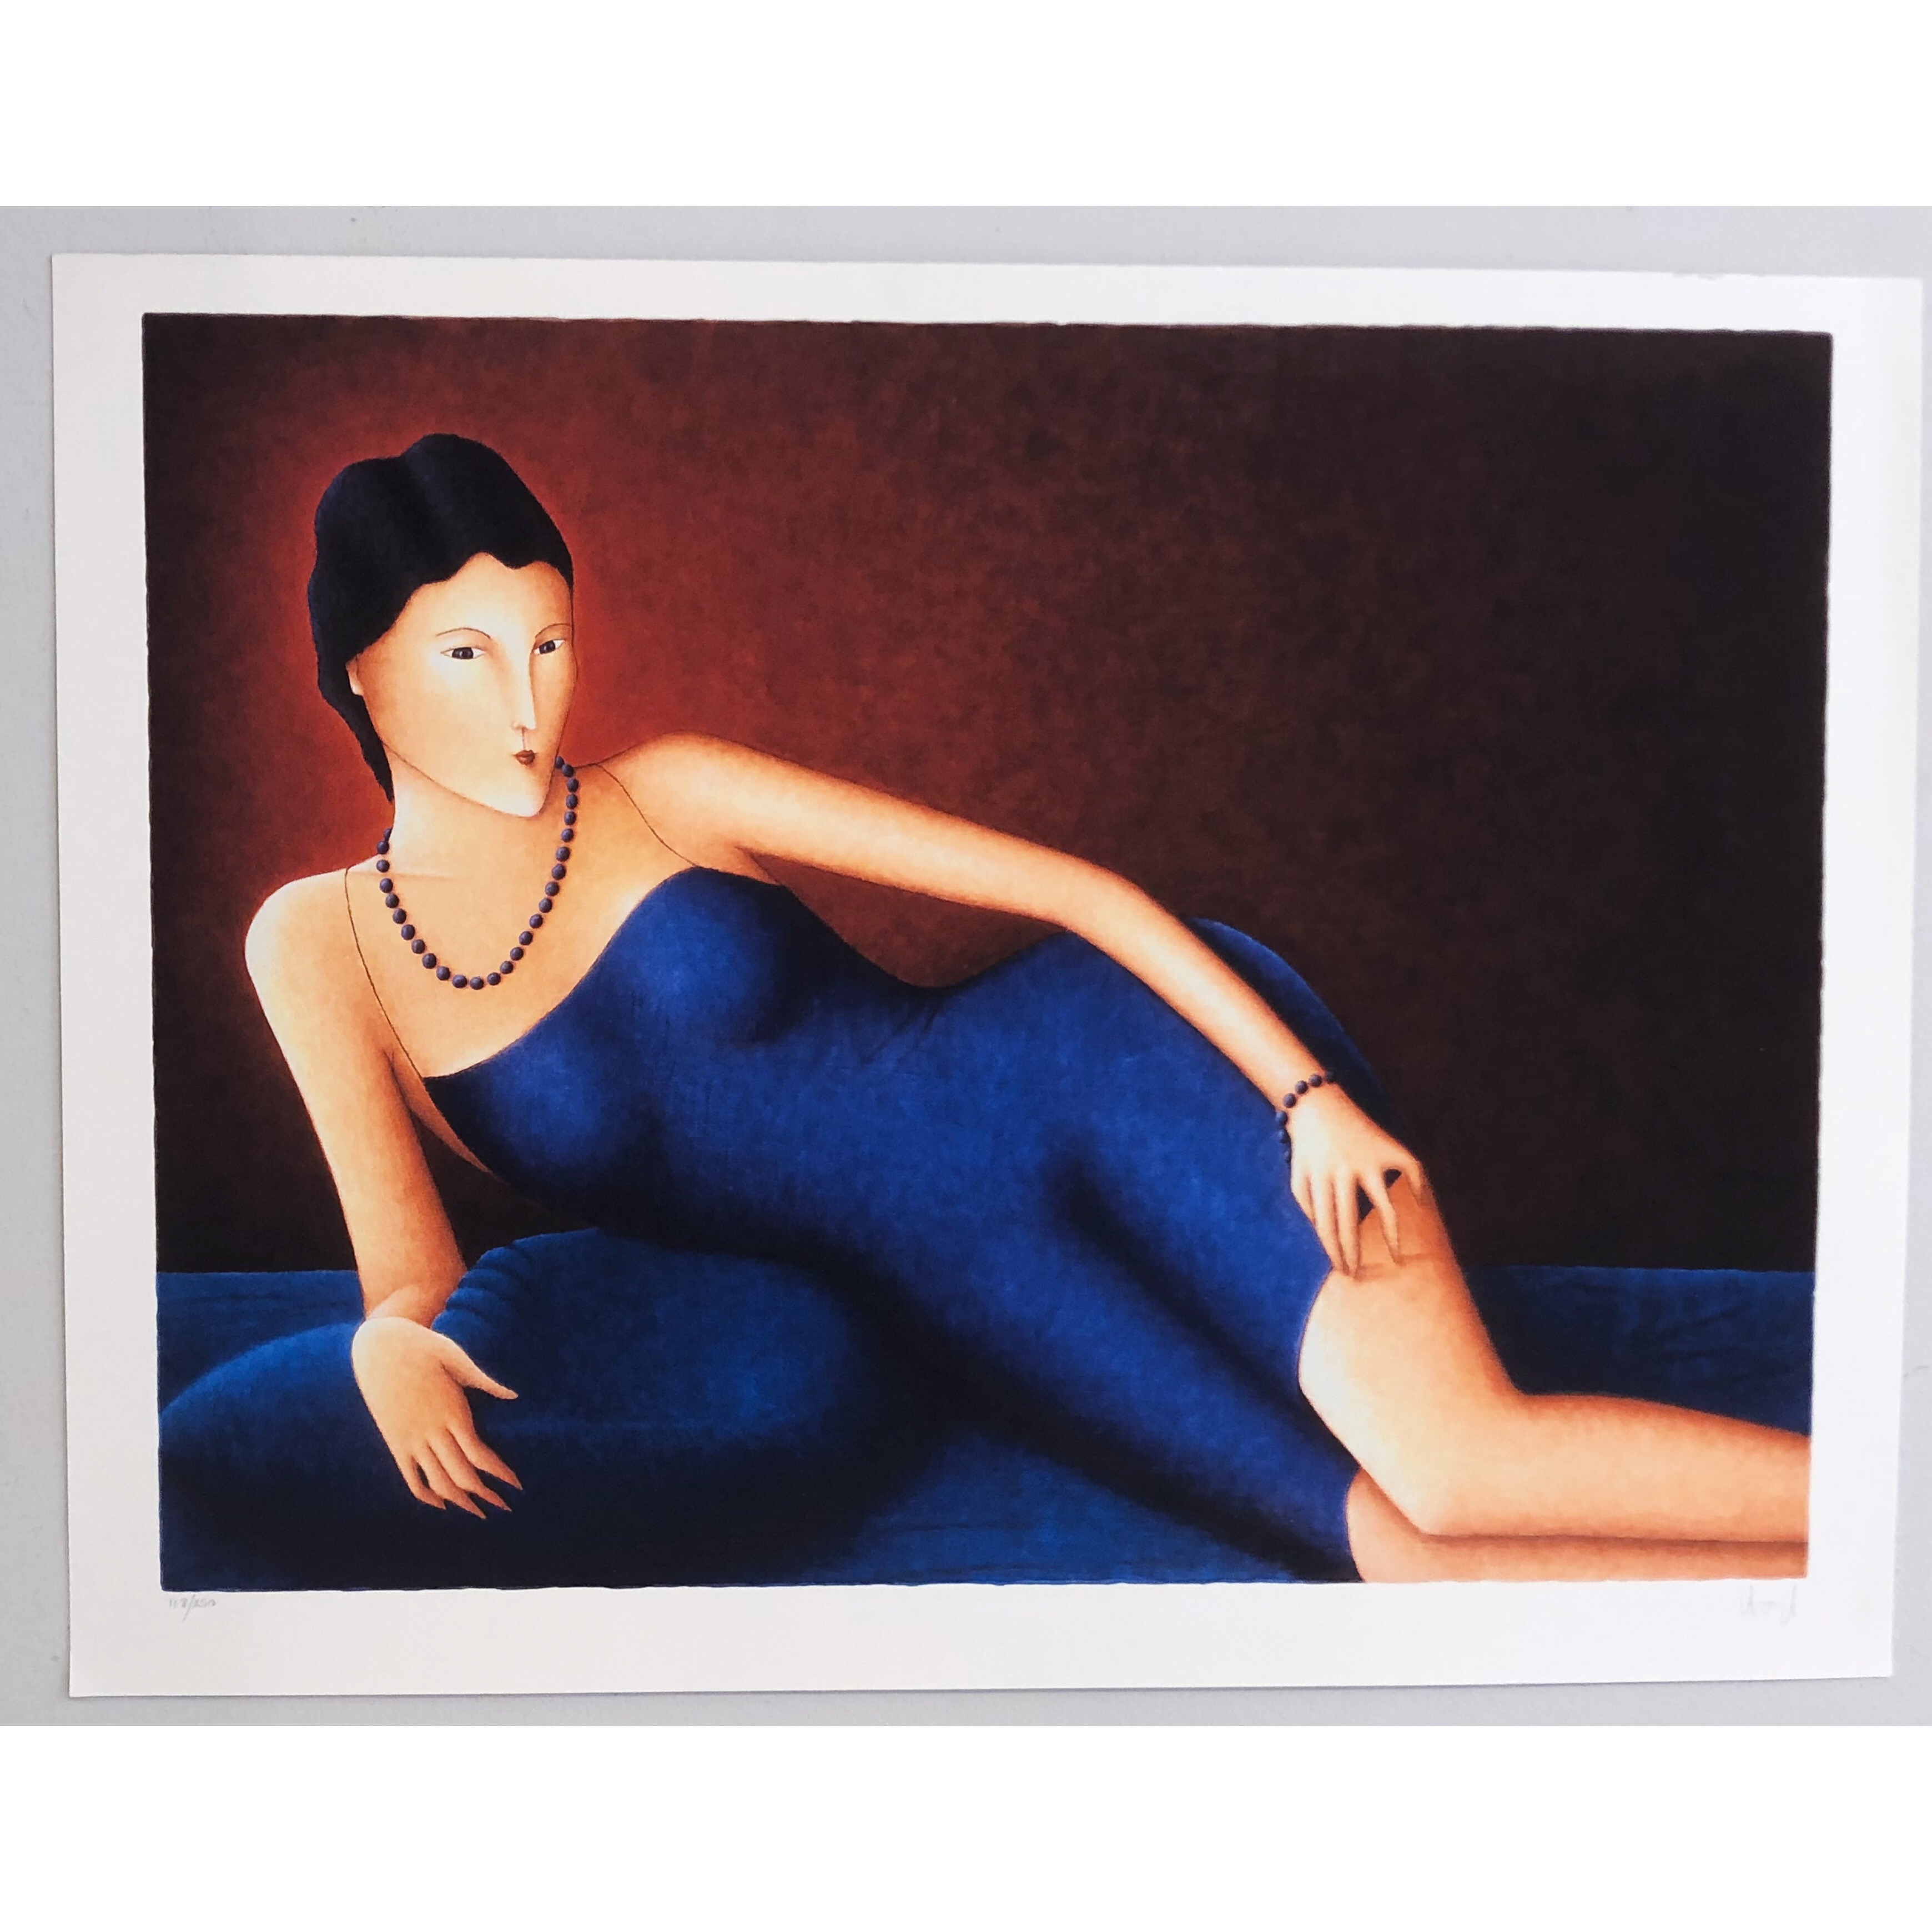 "Woman in blue dress" Lithograph by Ralf Artz. 75 x 58 cm